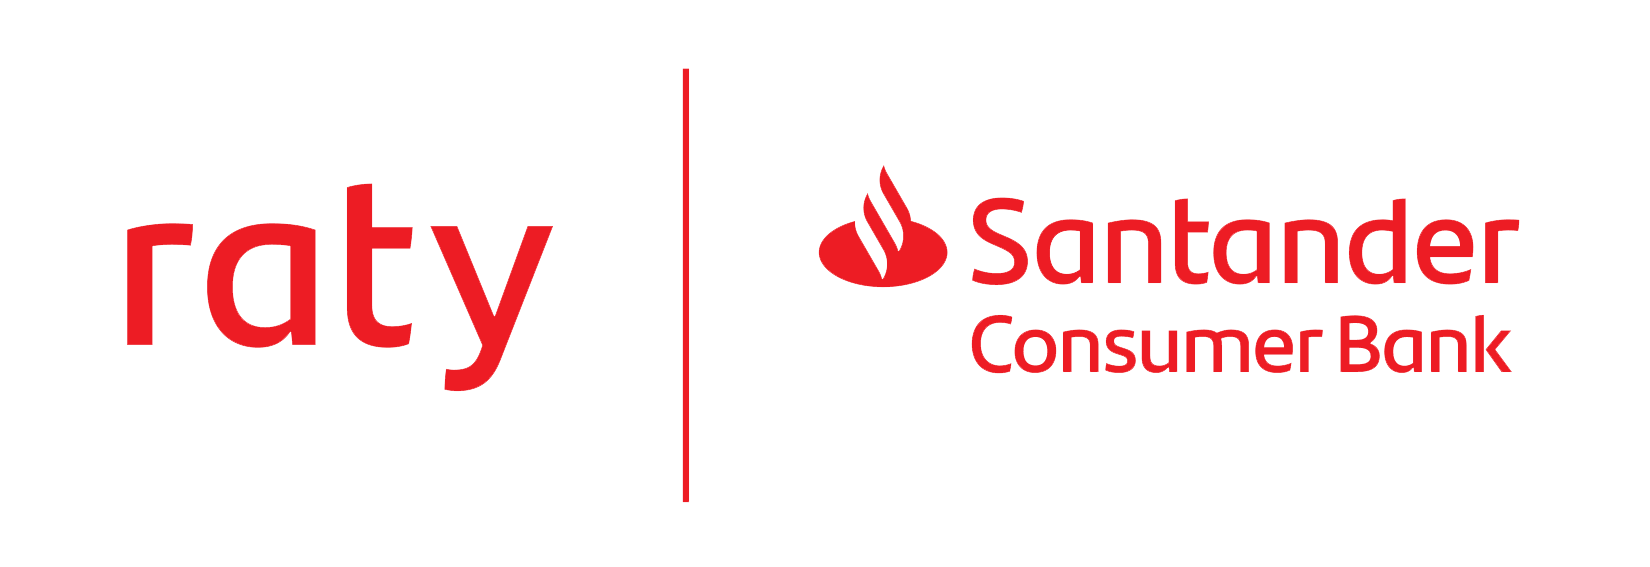 Raty w Santander bank - expertmeble.com Szczecin